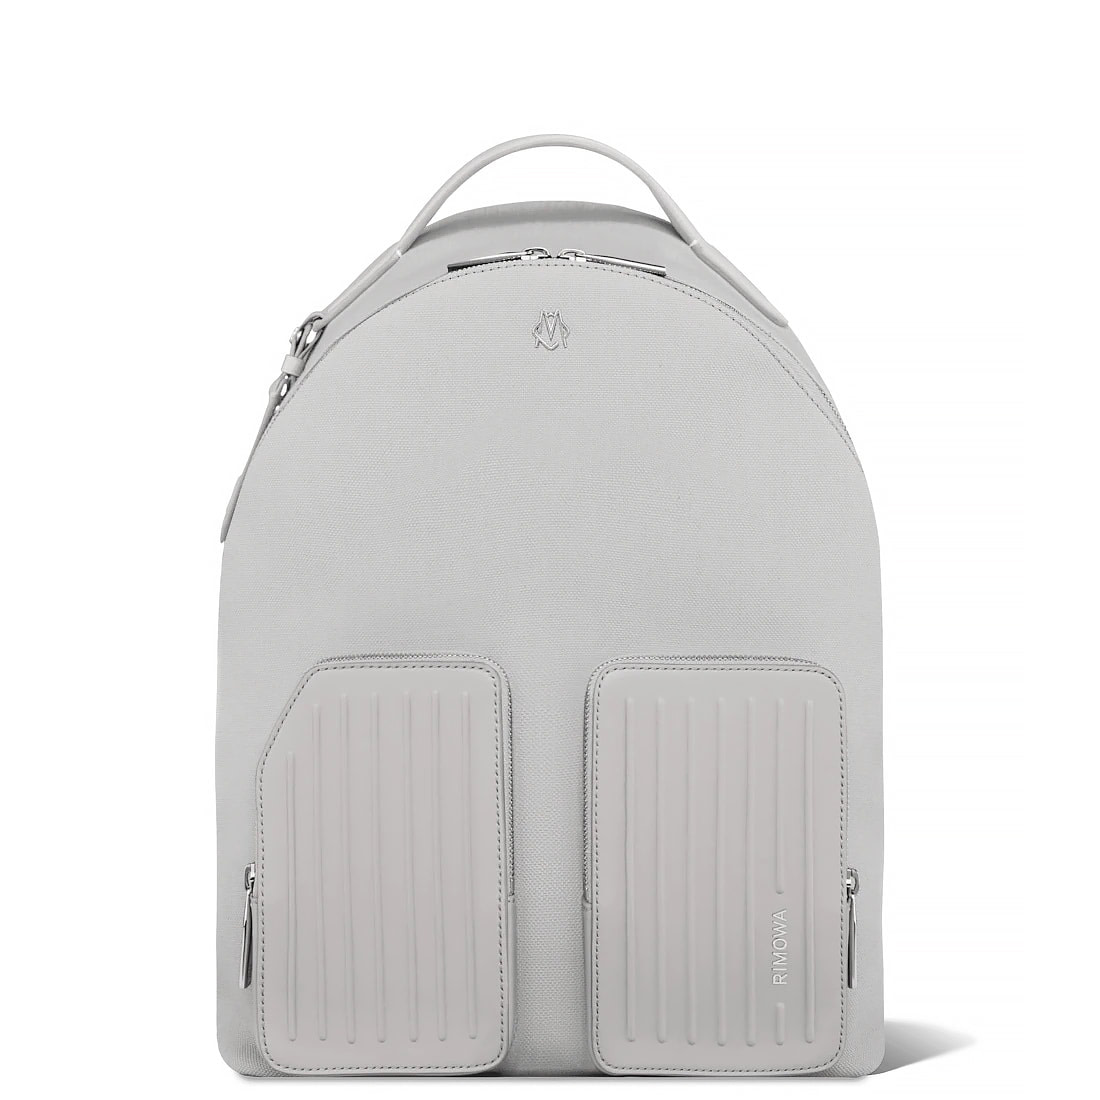 Luxury backpack for women